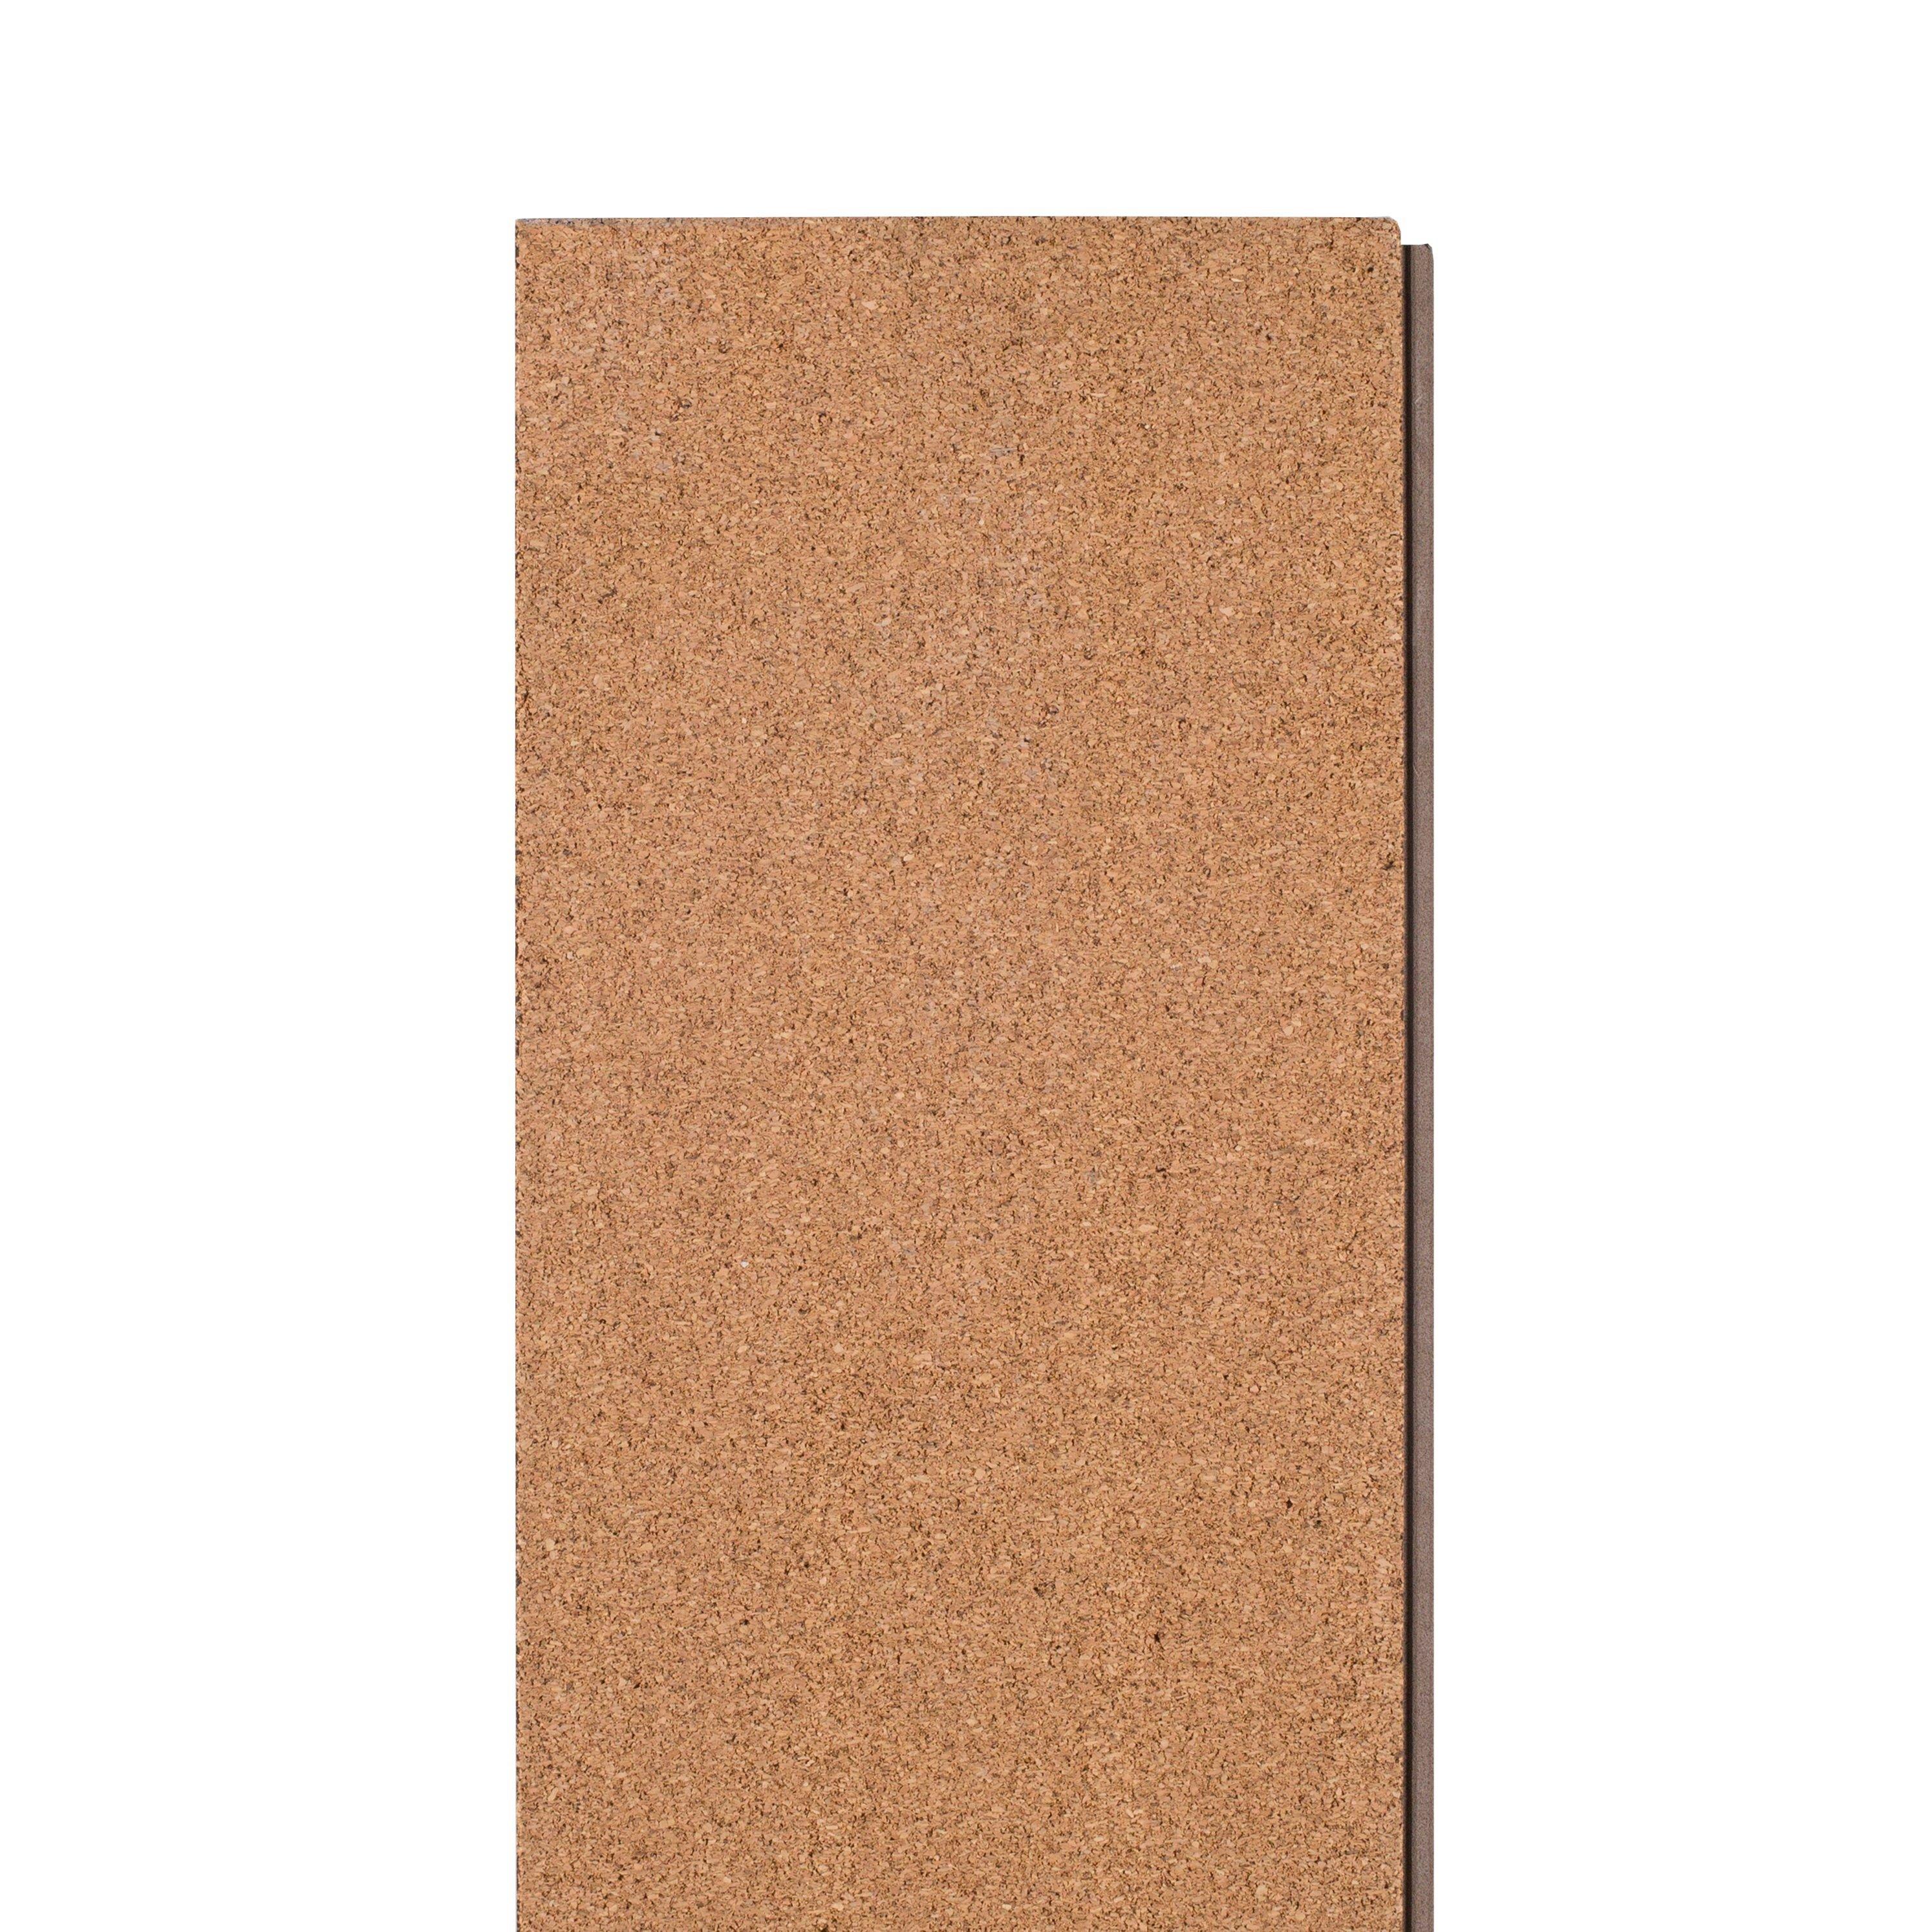 White Pewter Rigid Core Luxury Vinyl Plank - Cork Back